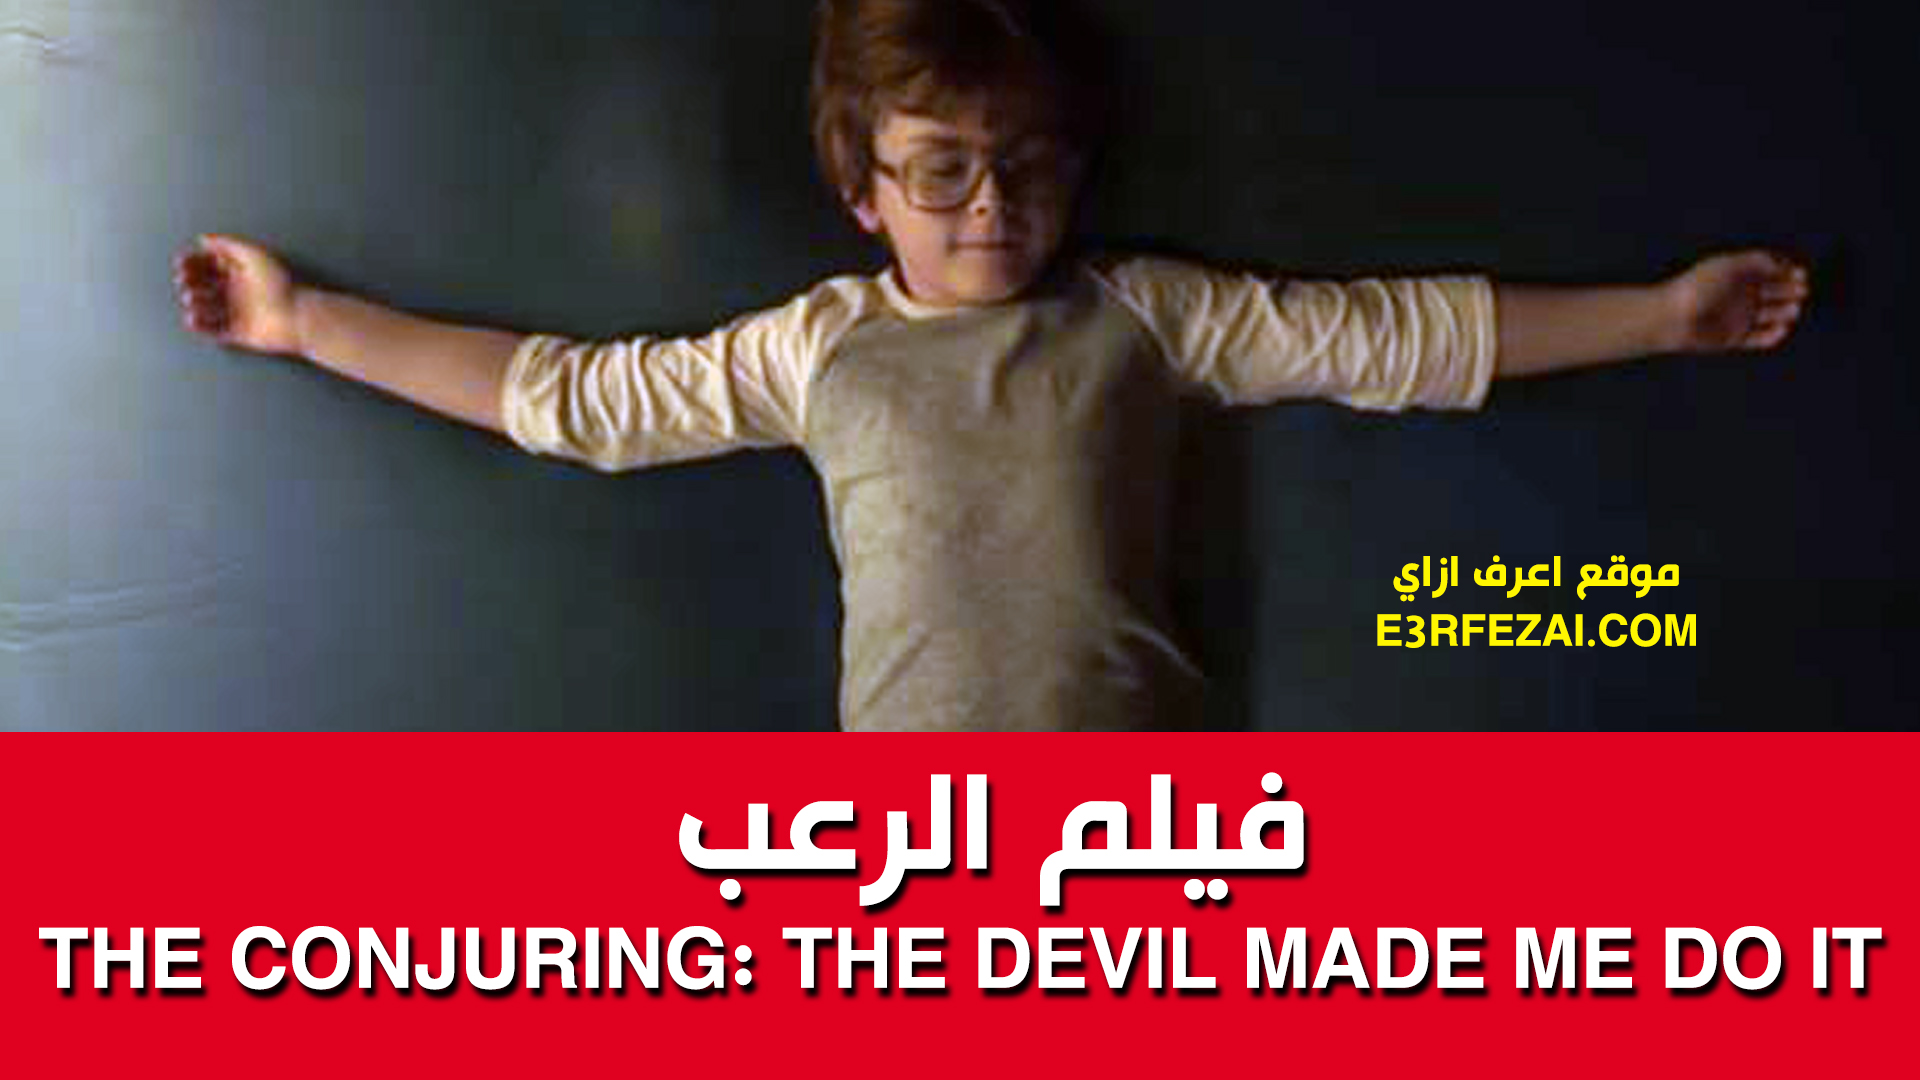 فيلم الرعب The Conjuring: The Devil Made Me Do It - موقع اعرف ازاي